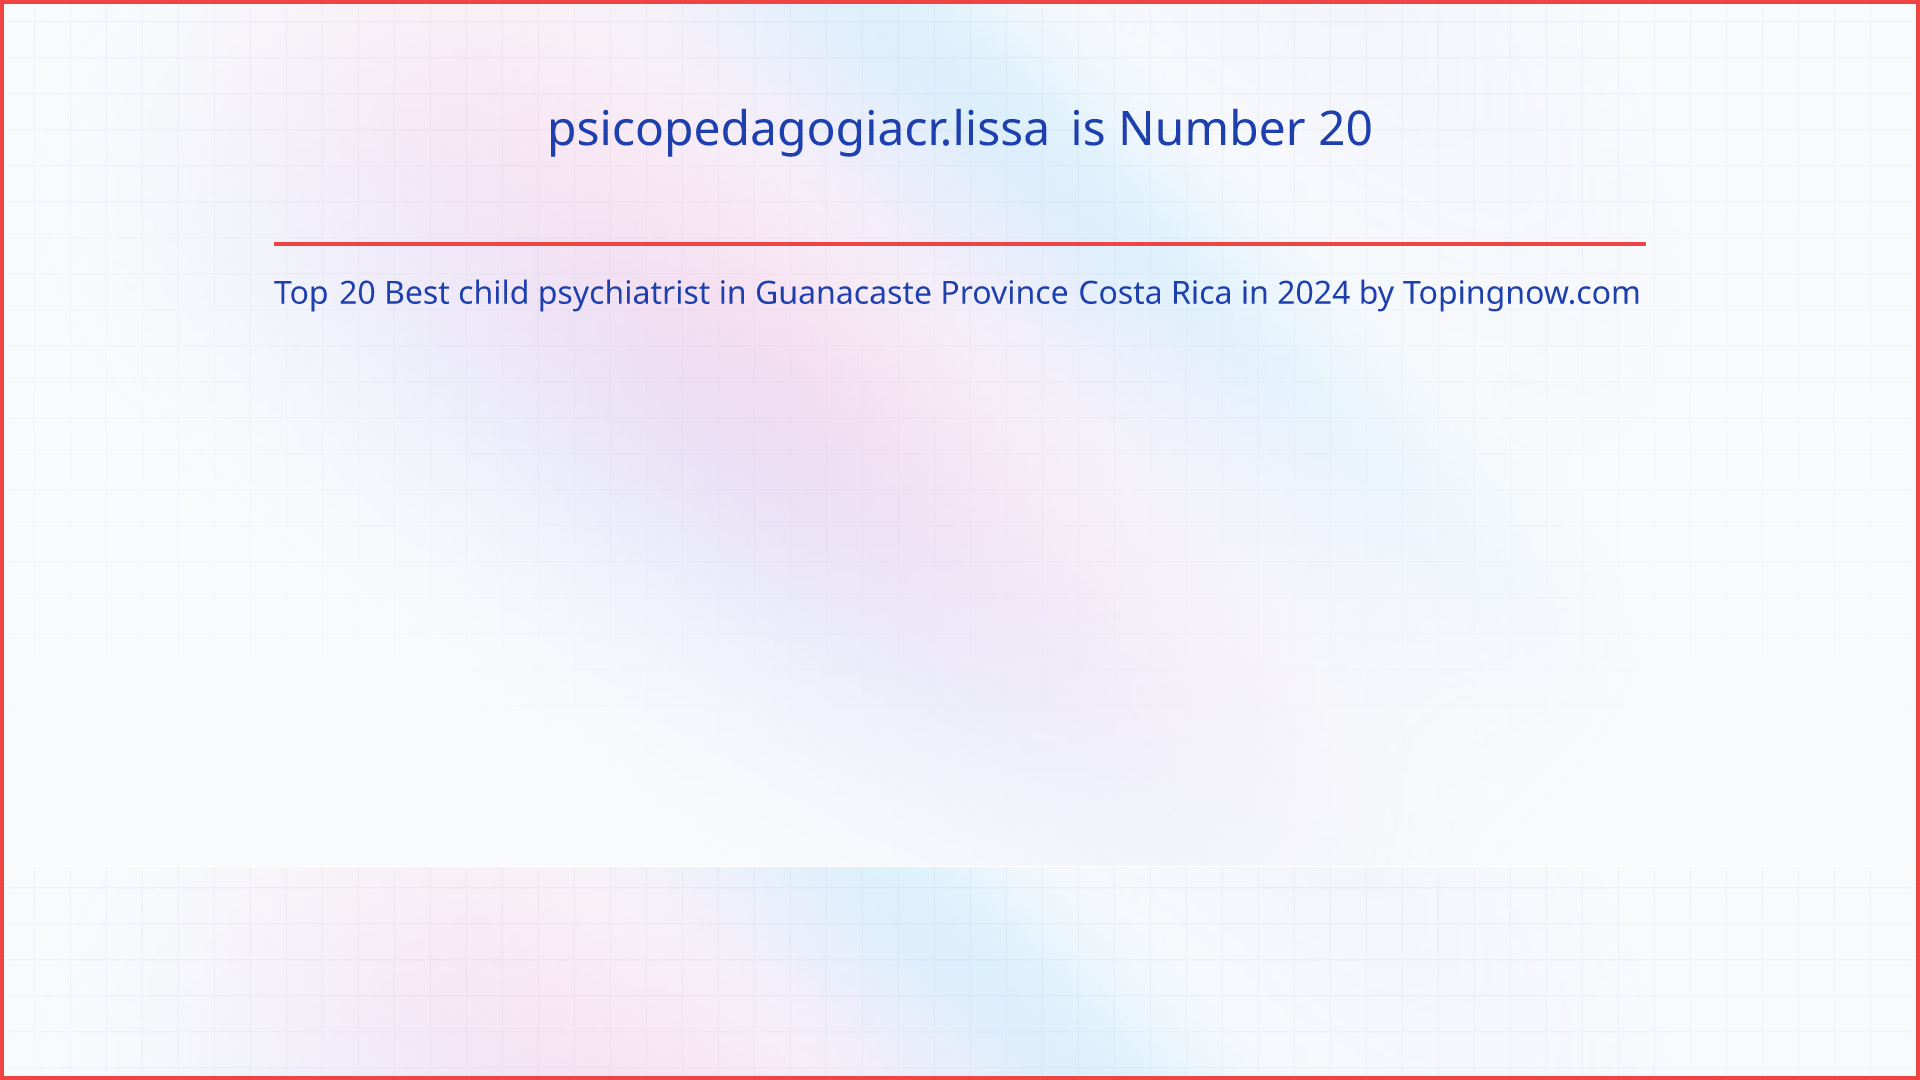 psicopedagogiacr.lissa: Top 20 Best child psychiatrist in Guanacaste Province Costa Rica in 2024